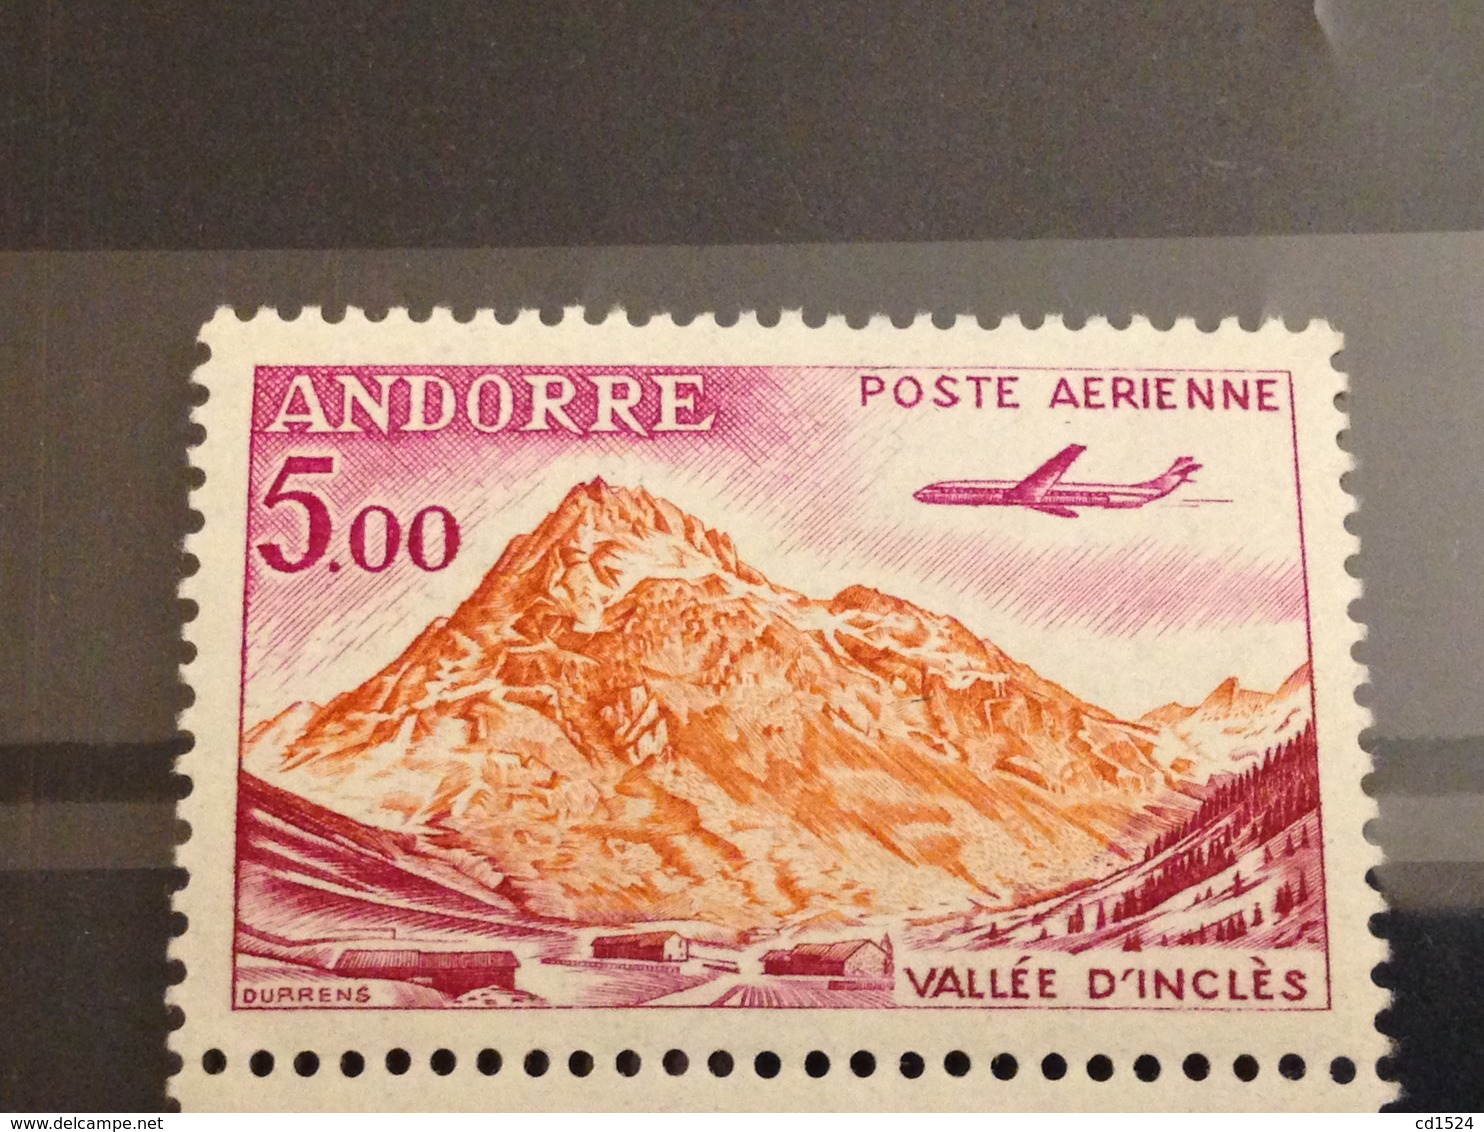 ANDORRE FRANCAIS - Neuf** - Poste Aérienne - 1961 - Airmail